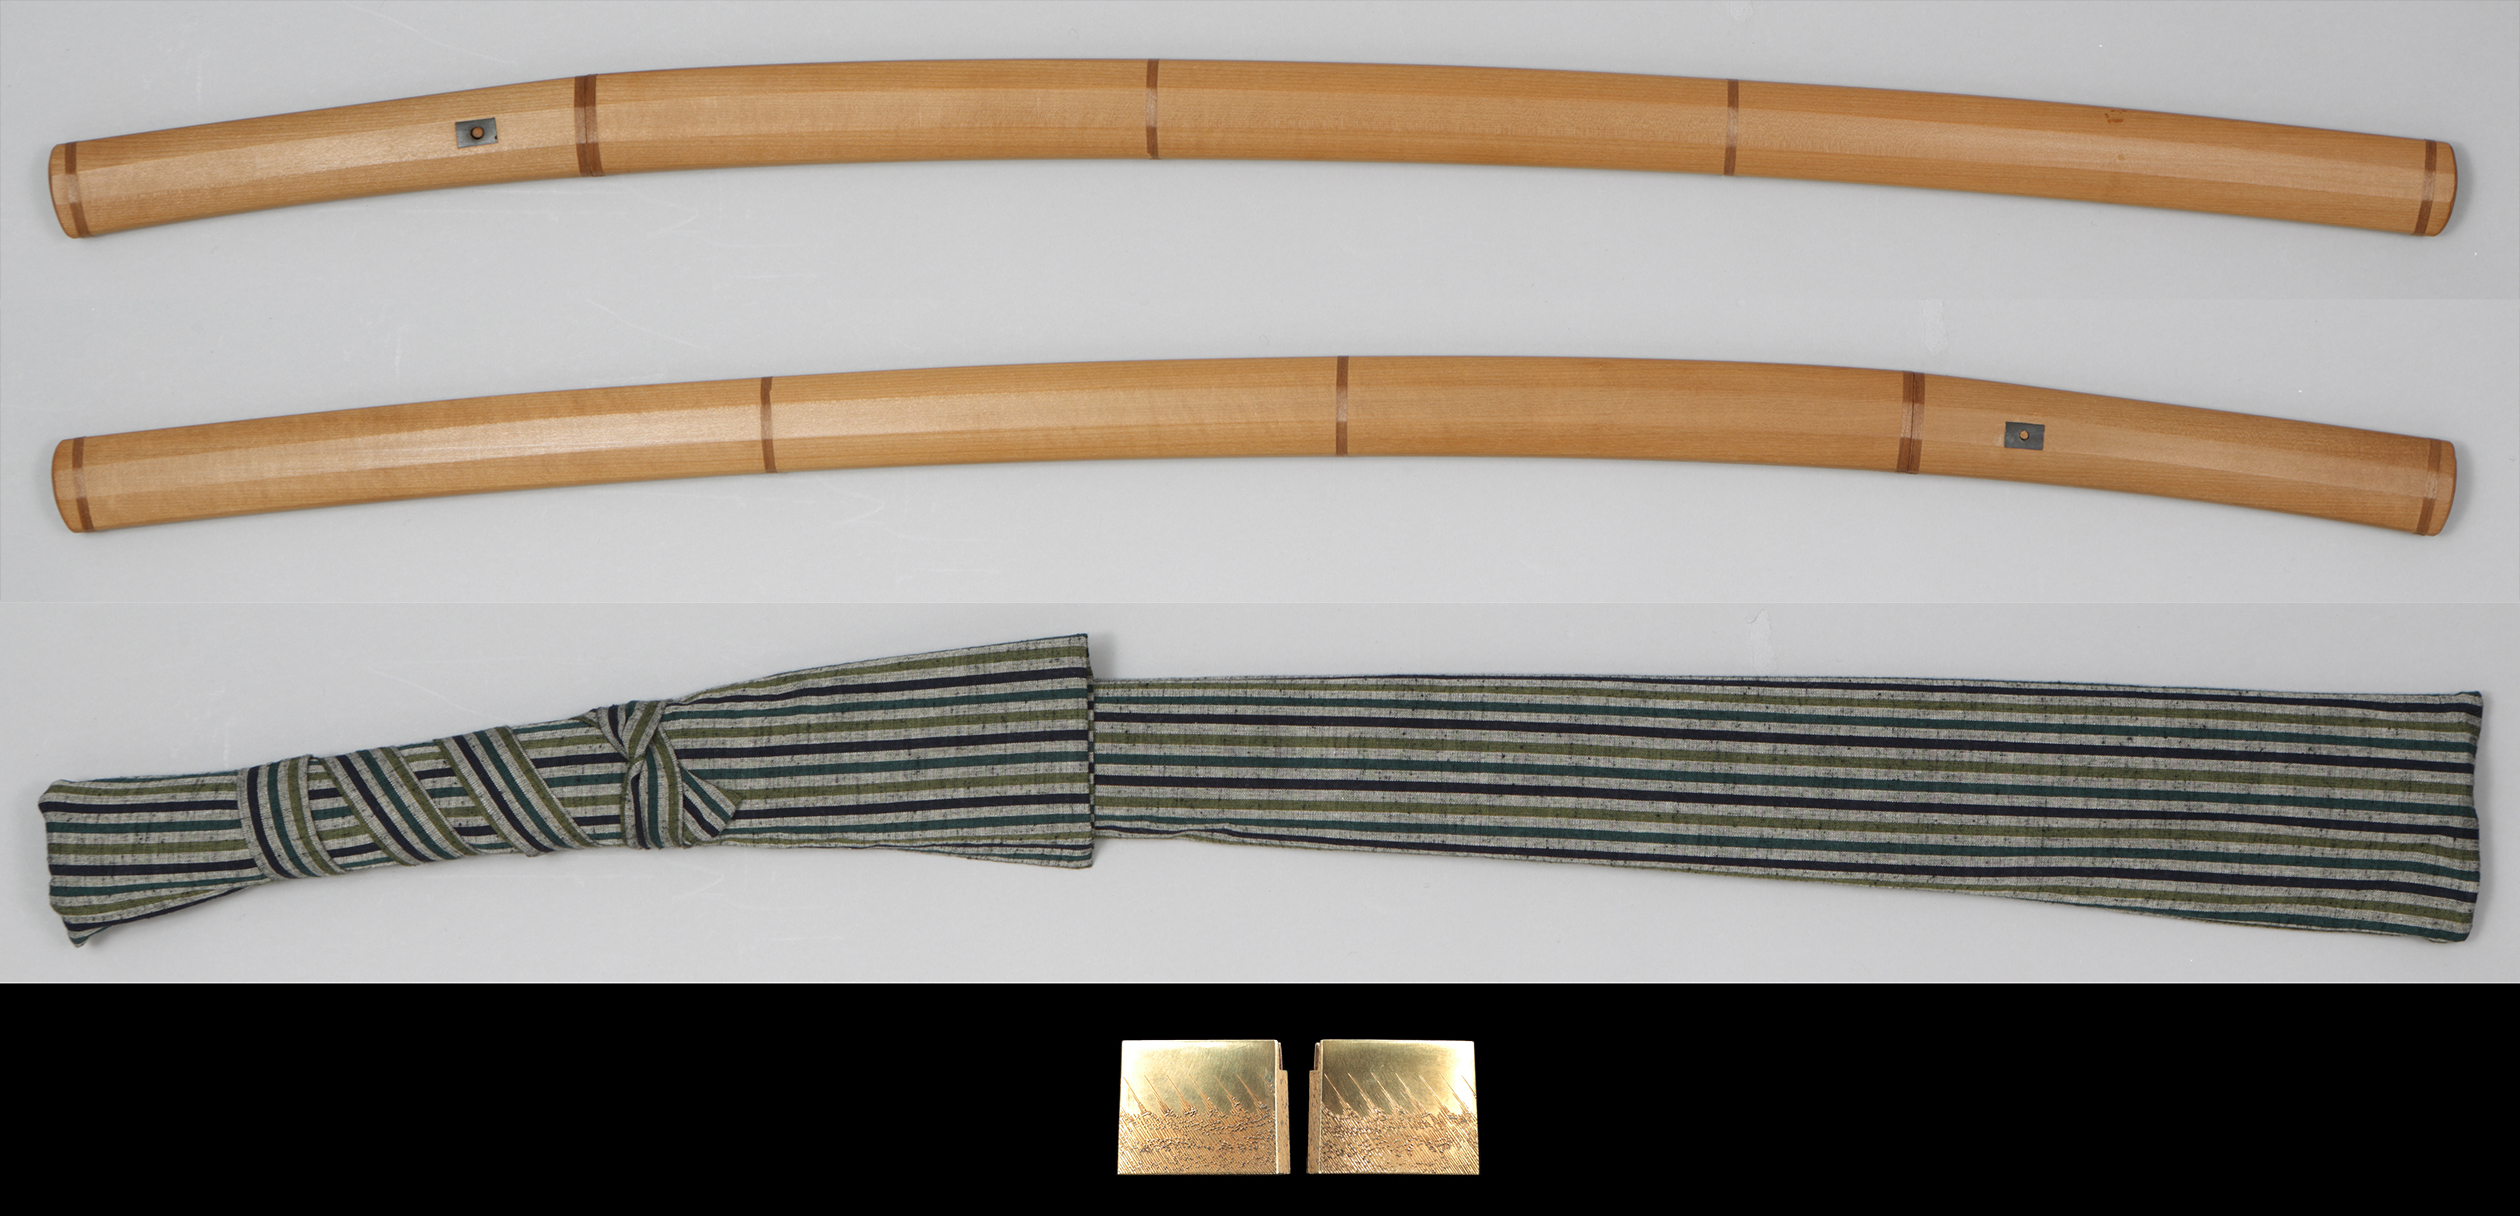 Bamboo Stick Sword